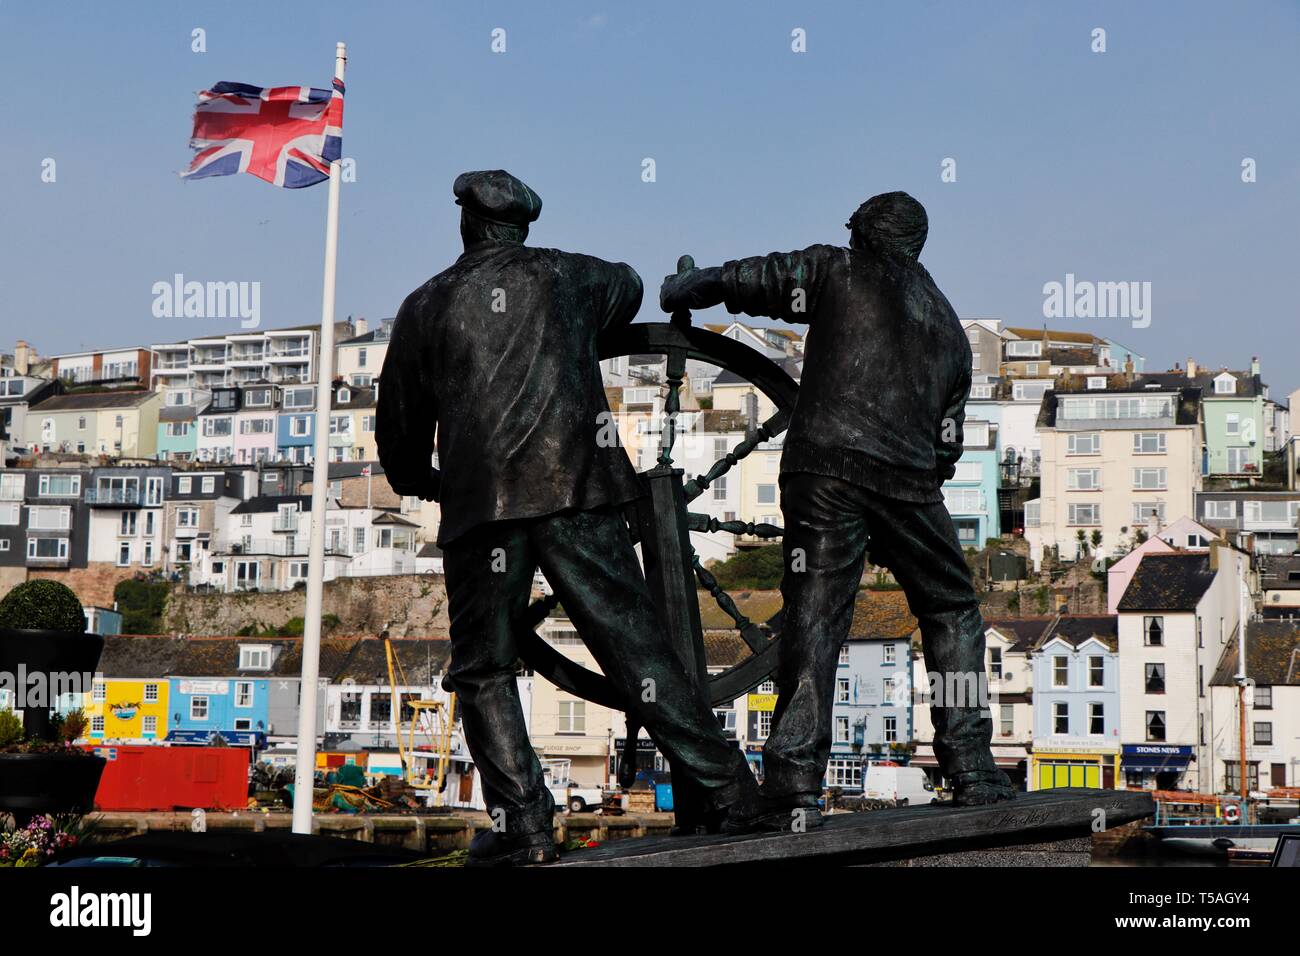 A statue to honour those lost at sea overlooks Brixham Harbour. Brixham, Devon, UK Stock Photo